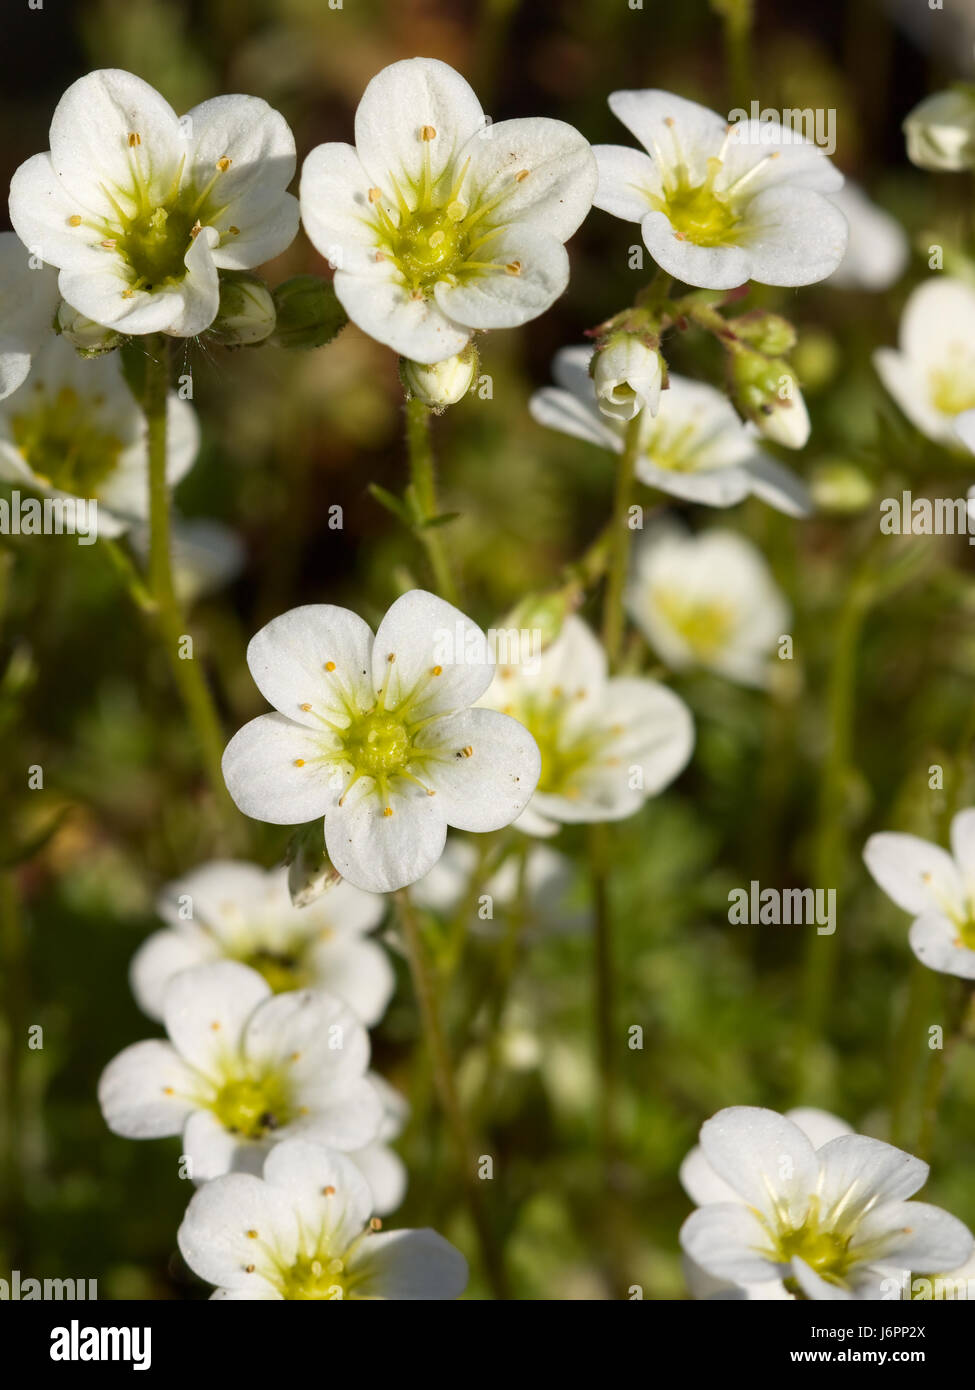 flower plant bloom blossom flourish flourishing macro close-up macro admission Stock Photo